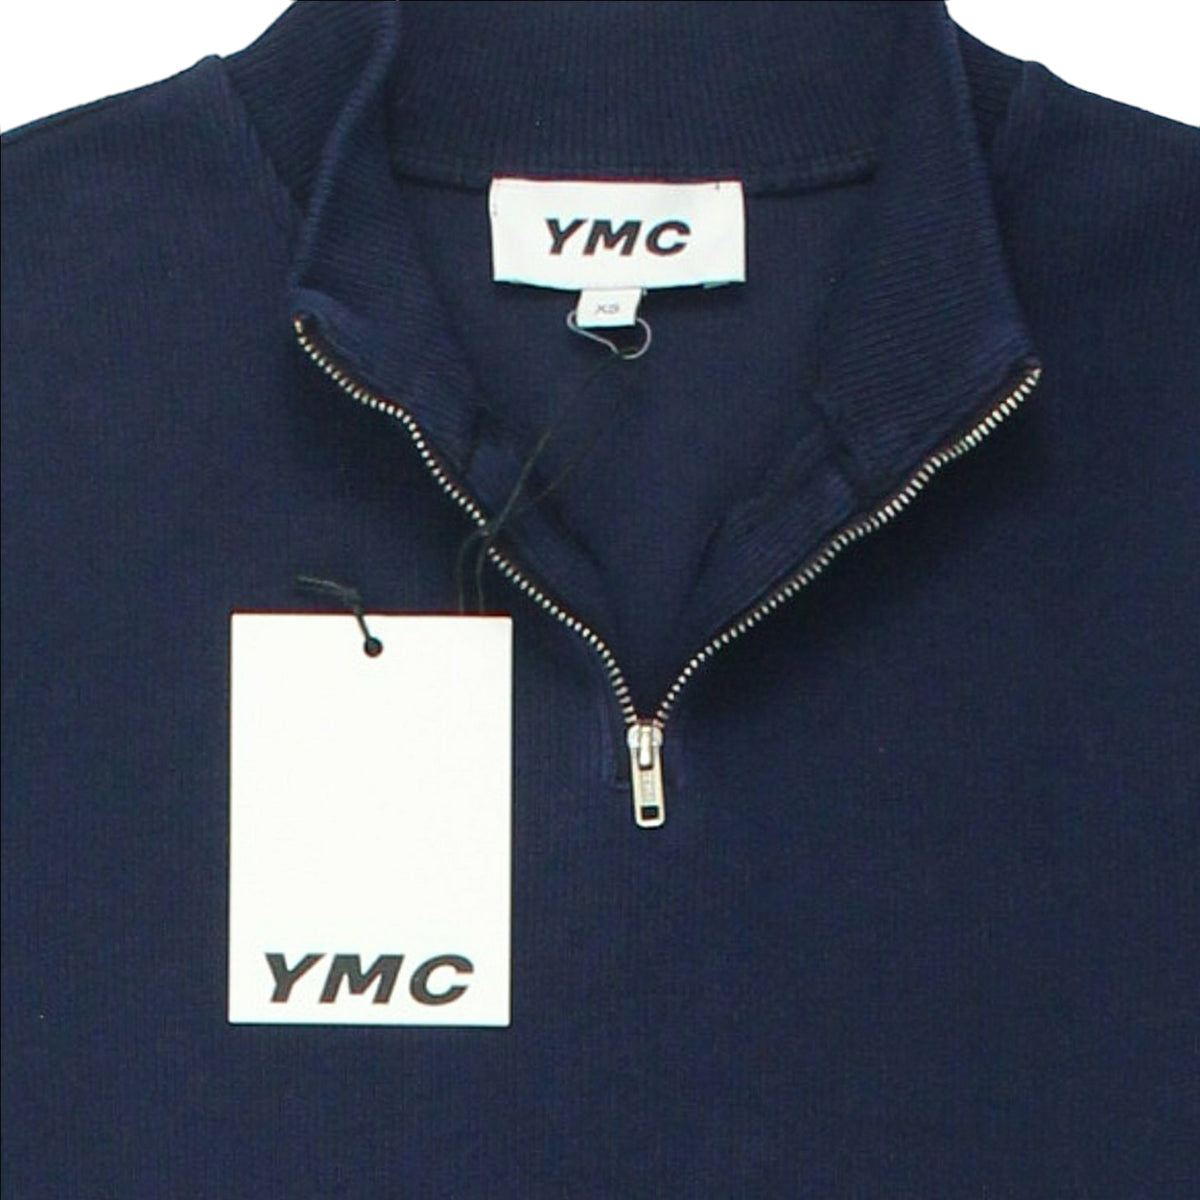 YMC Navy Rib 1/4 Zip Top